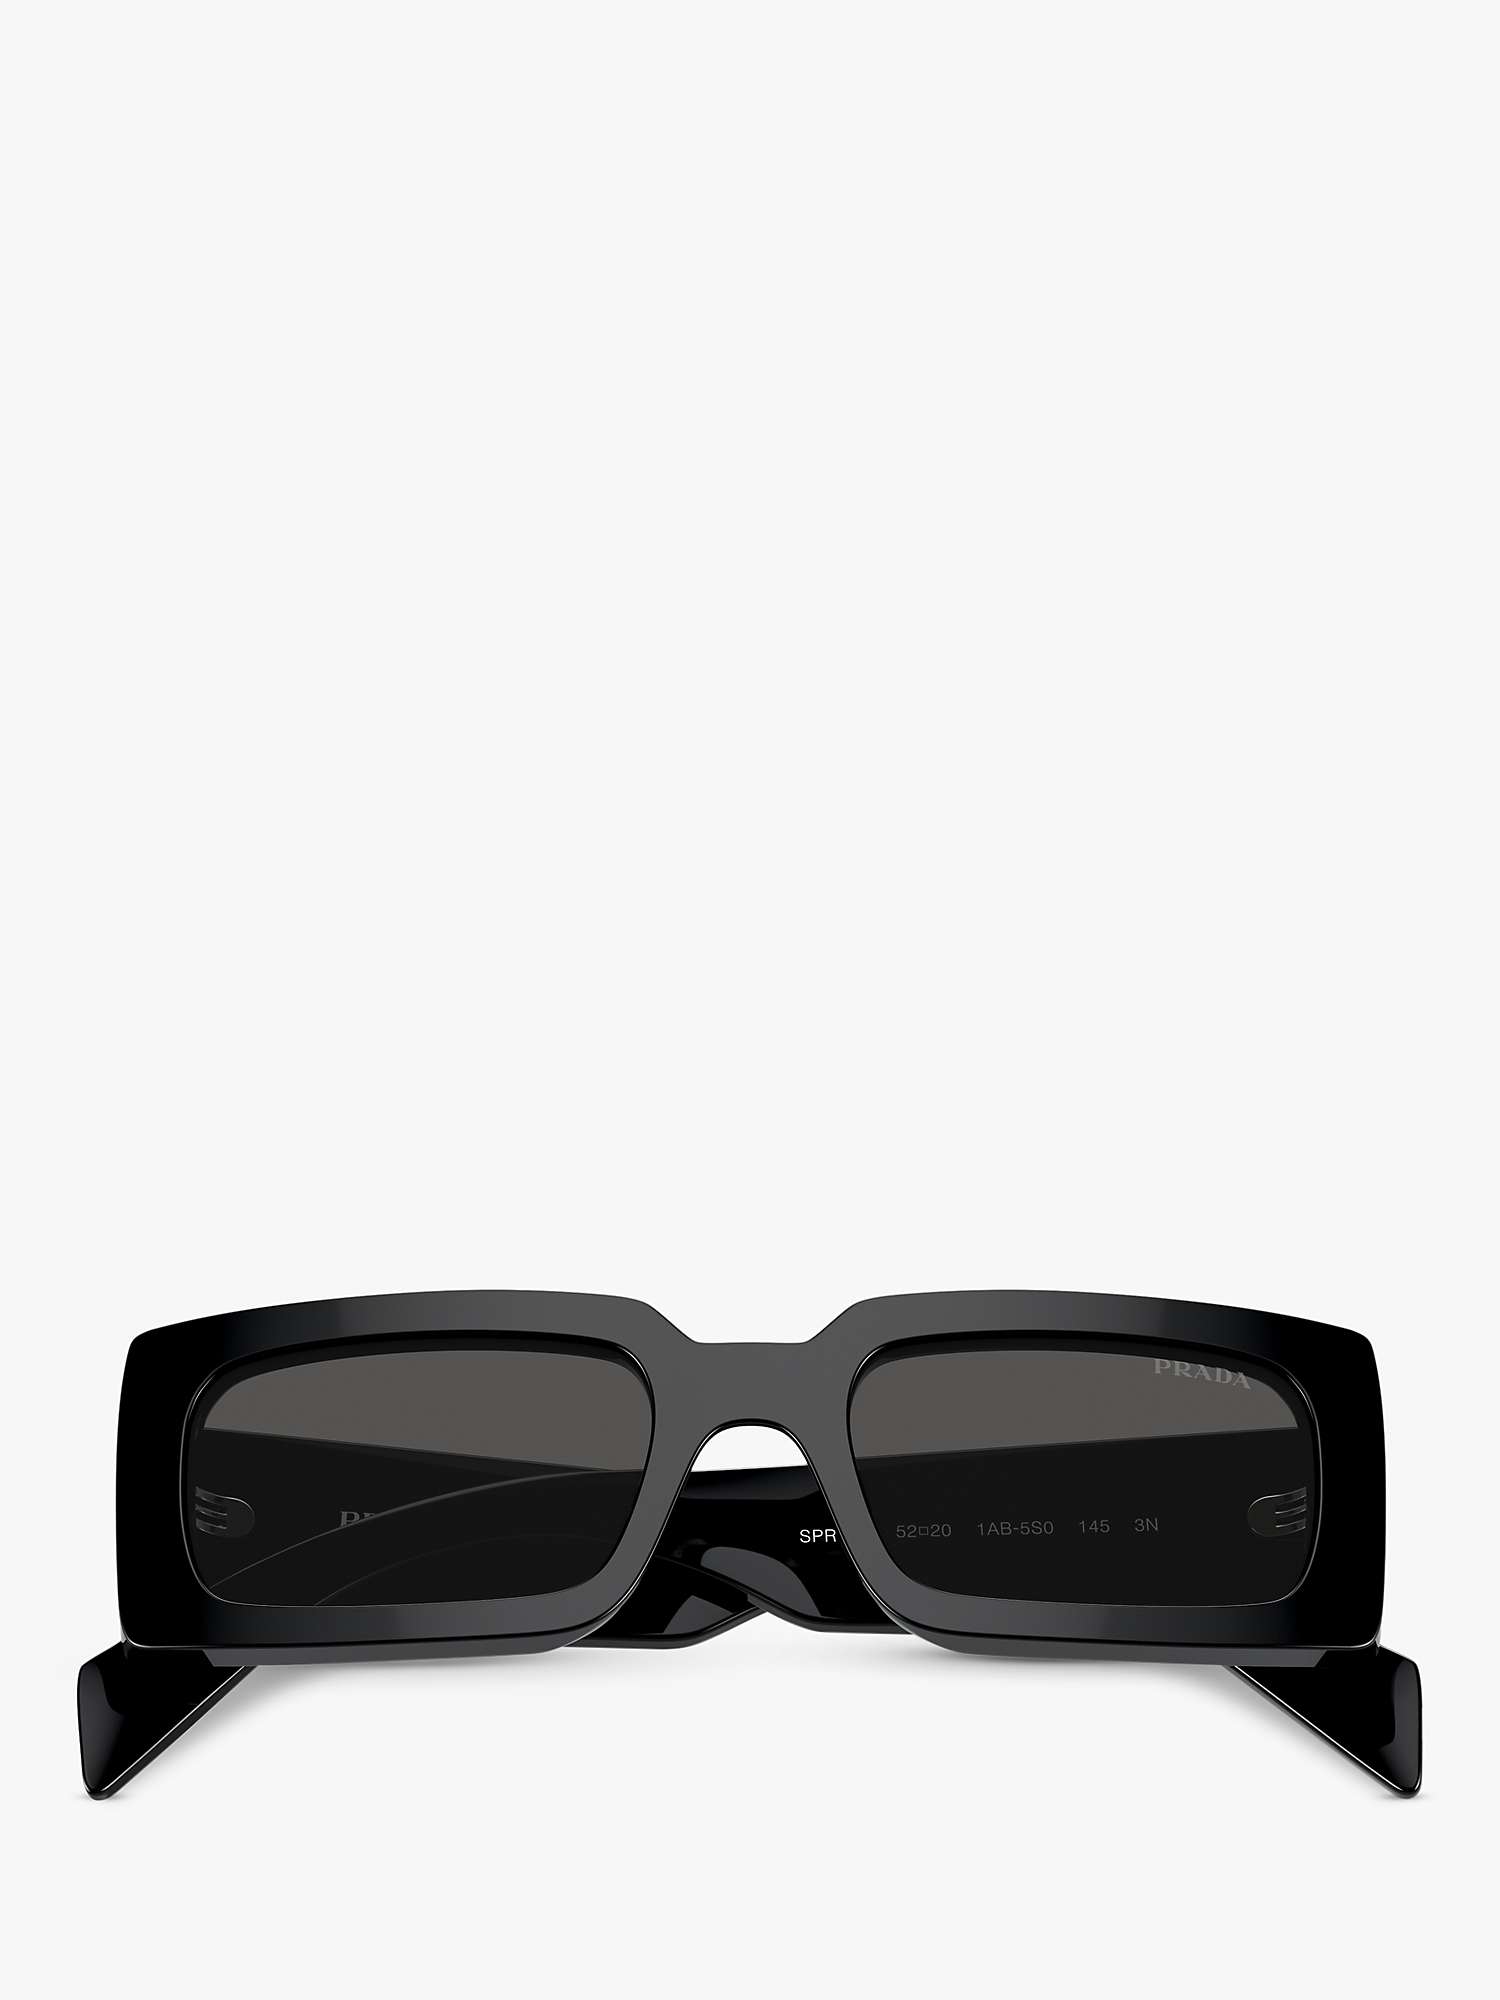 Buy Prada PR A07S Women's Rectangular Sunglasses Online at johnlewis.com